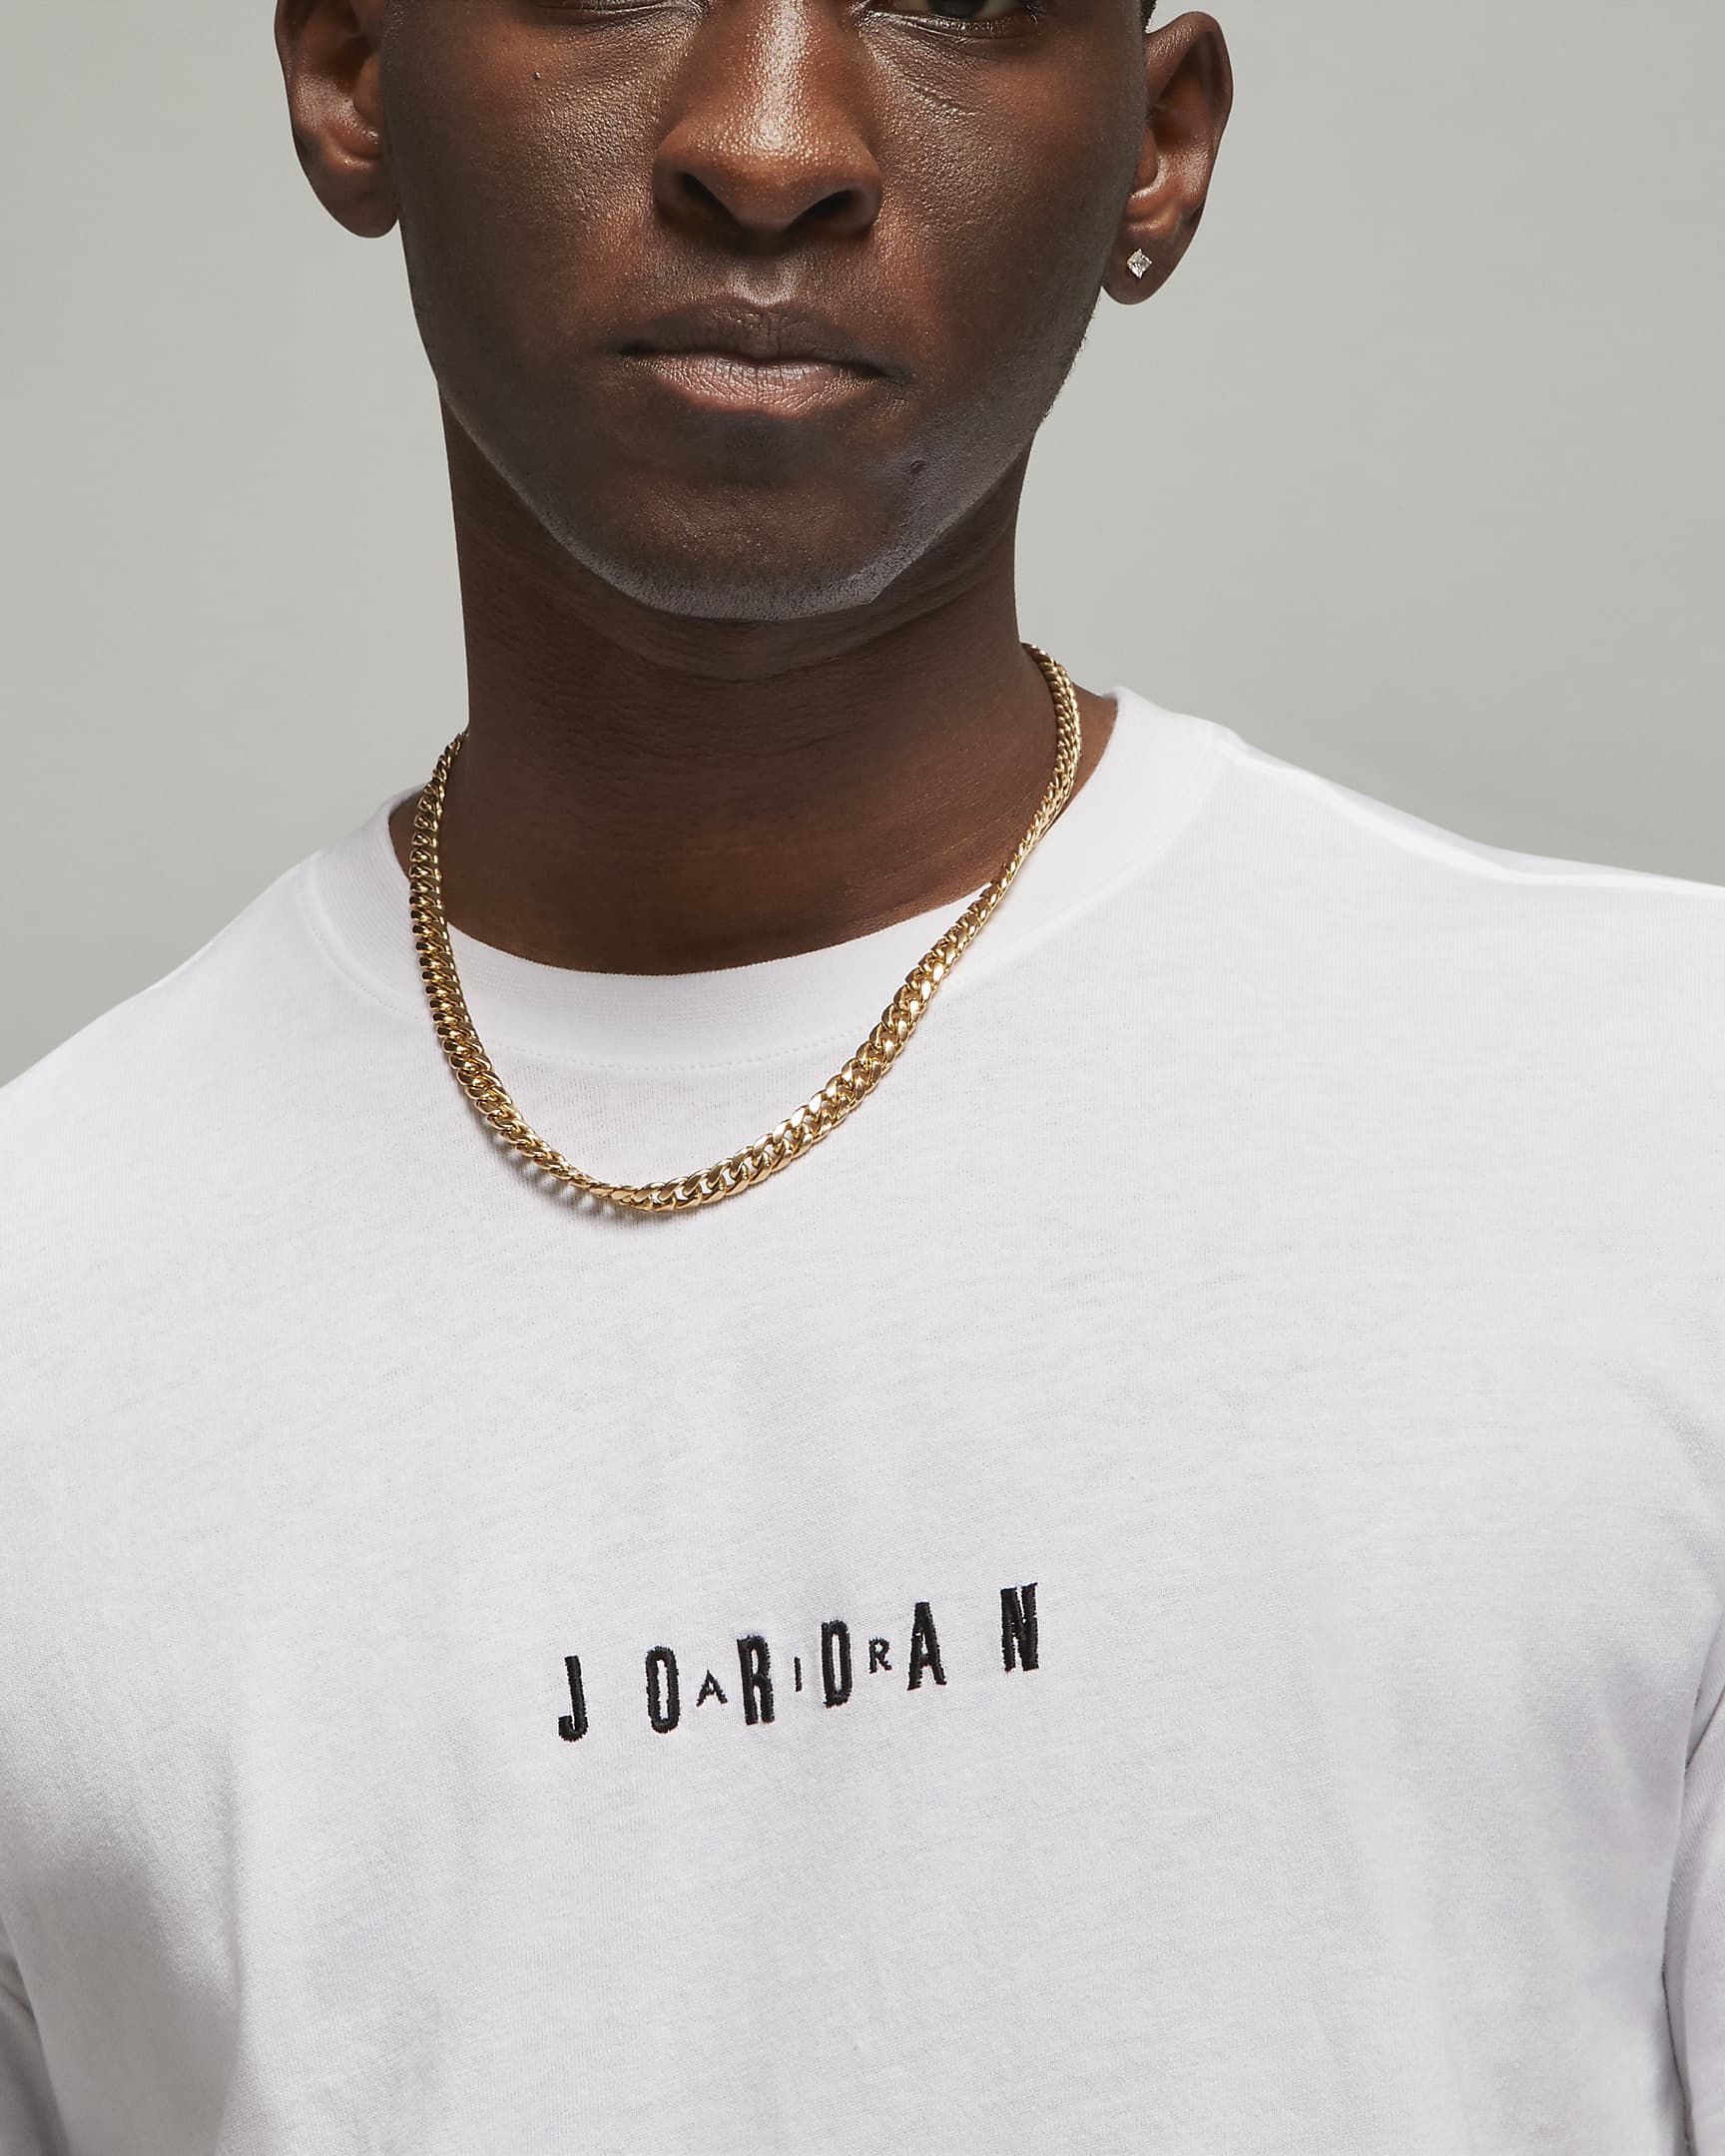 Jordan Air Men's T-Shirt - White/Black/Black